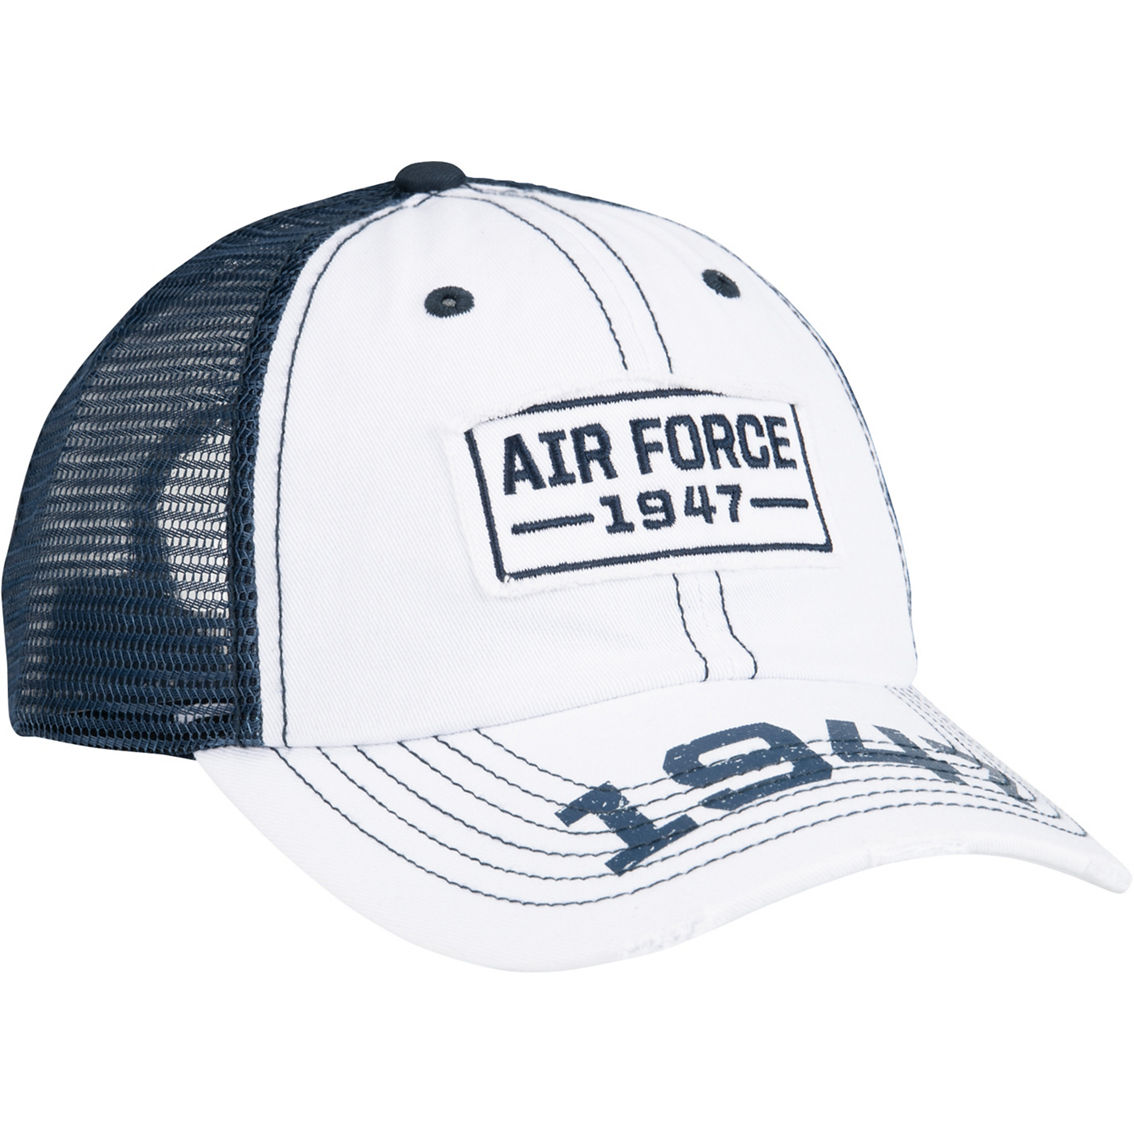 Blync Air Force Cotton Mesh Cap - Image 2 of 3